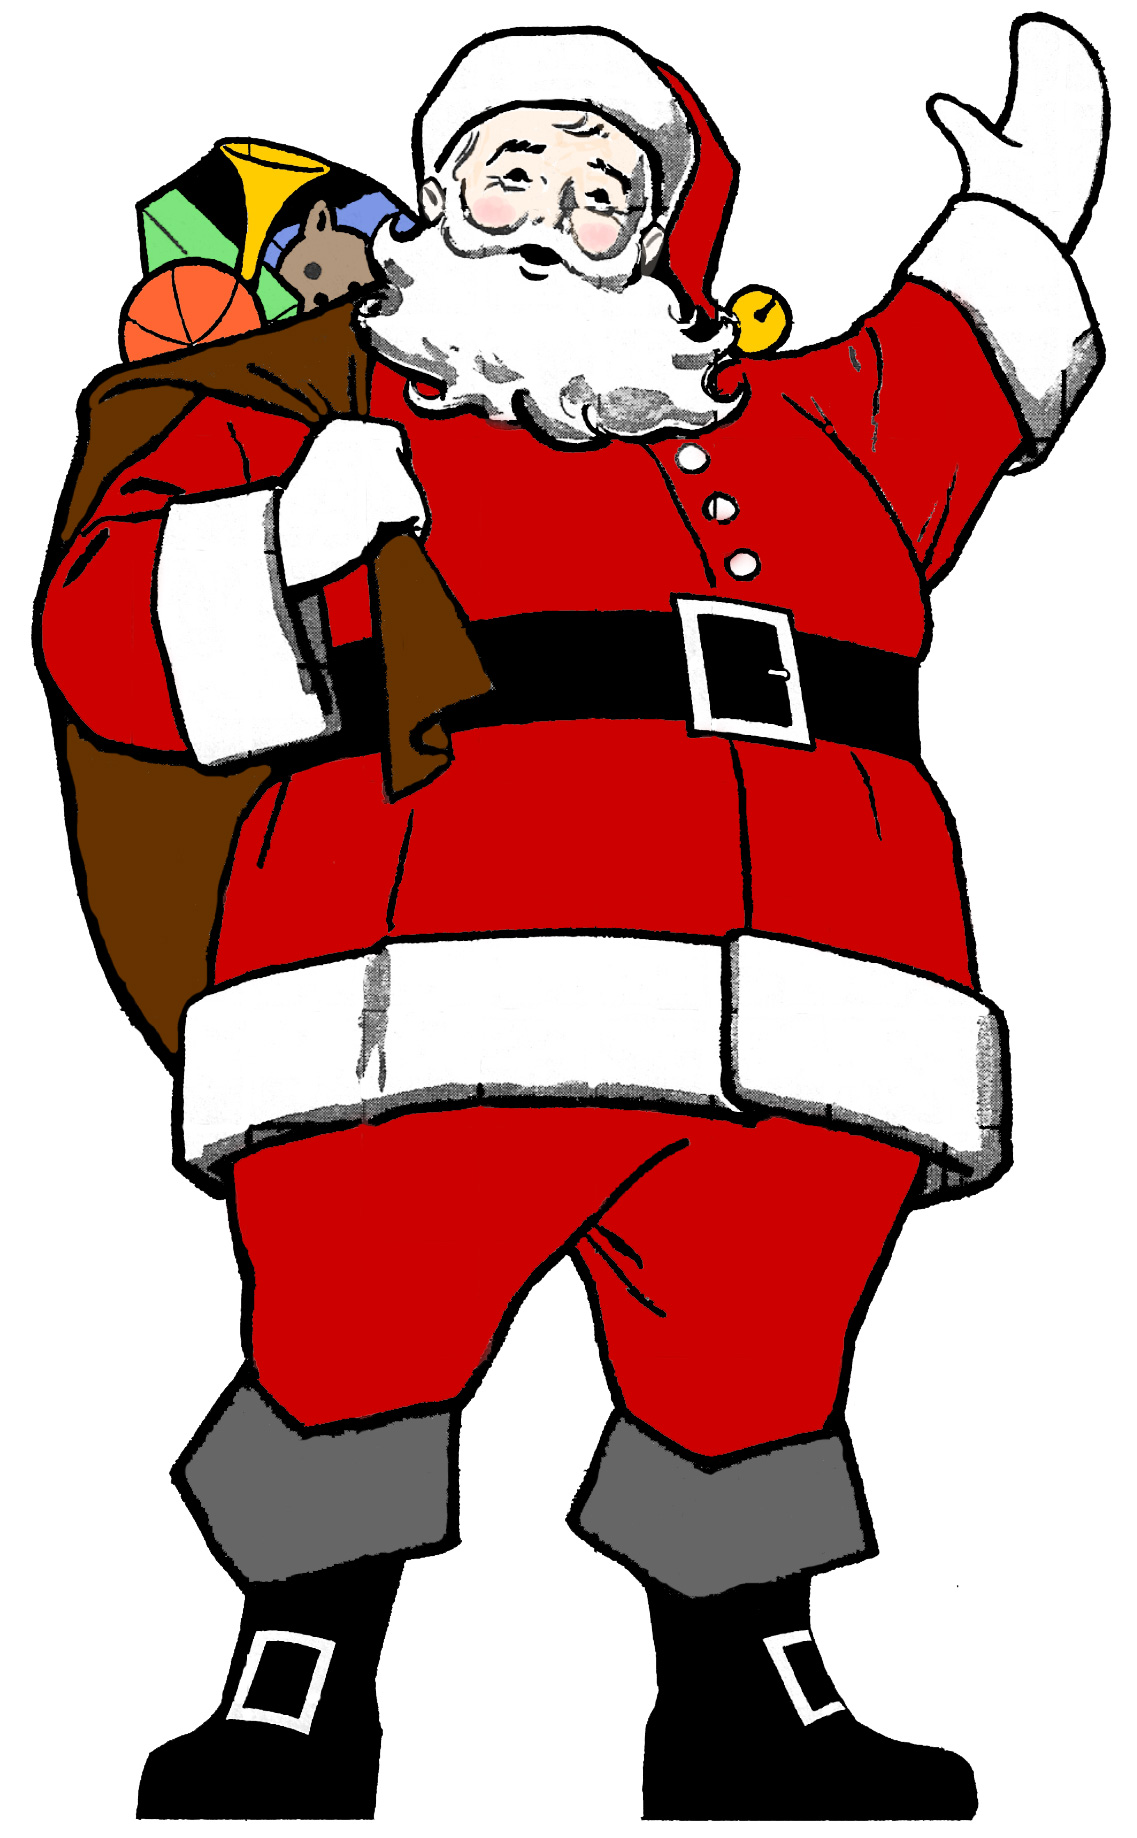 Big Santa Claus drawing free image download